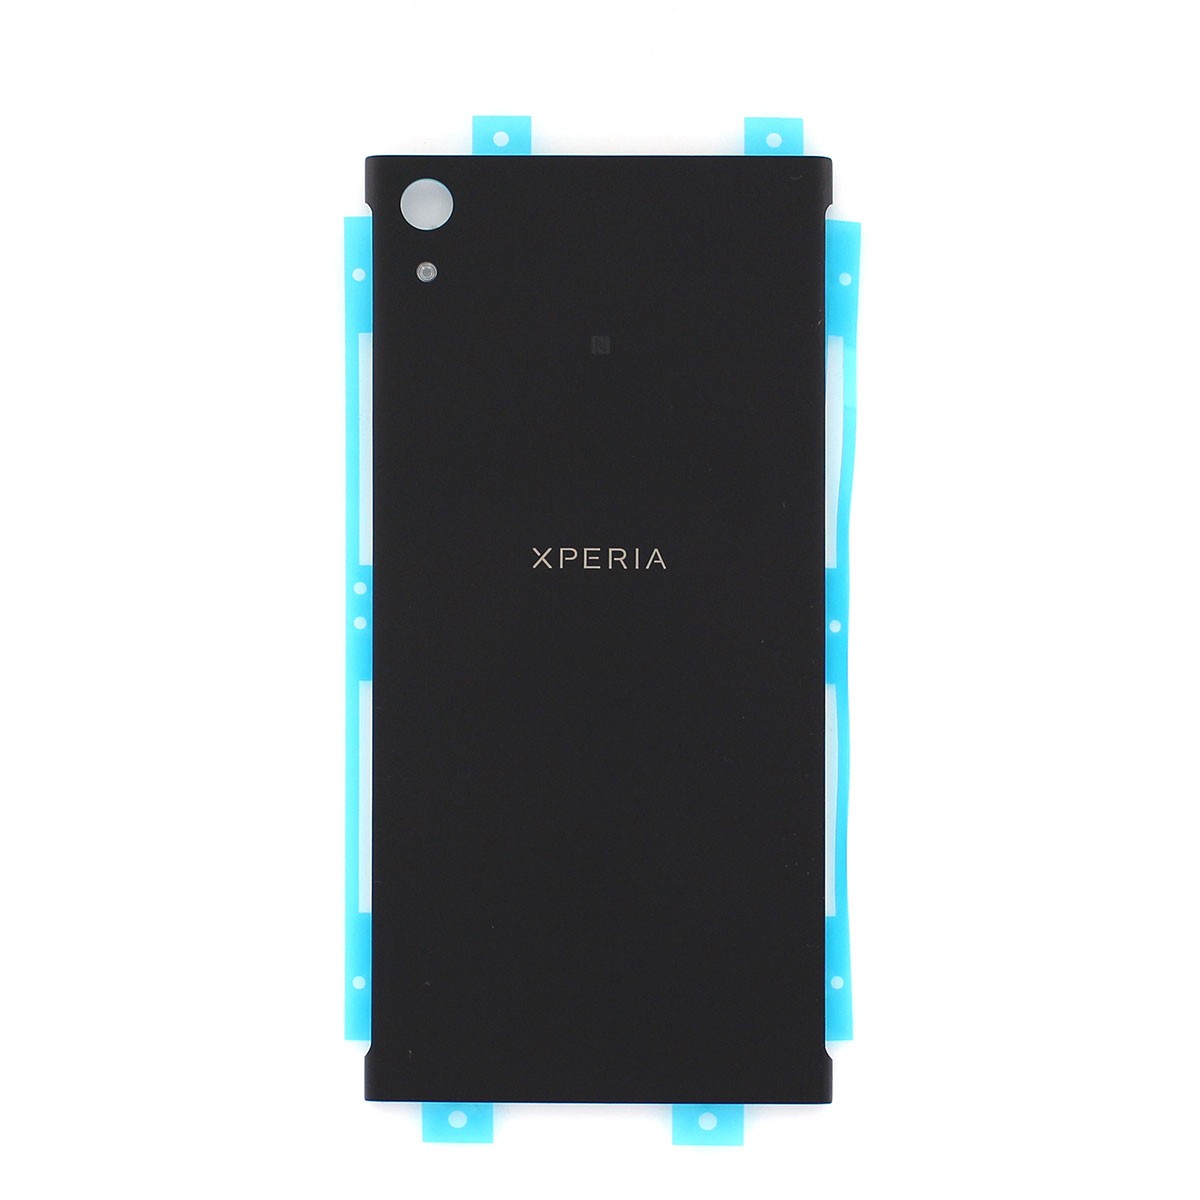 Coque arrière originale pour Xperia XA1 Ultra / XA1 Ultra Dual Noir photo 1